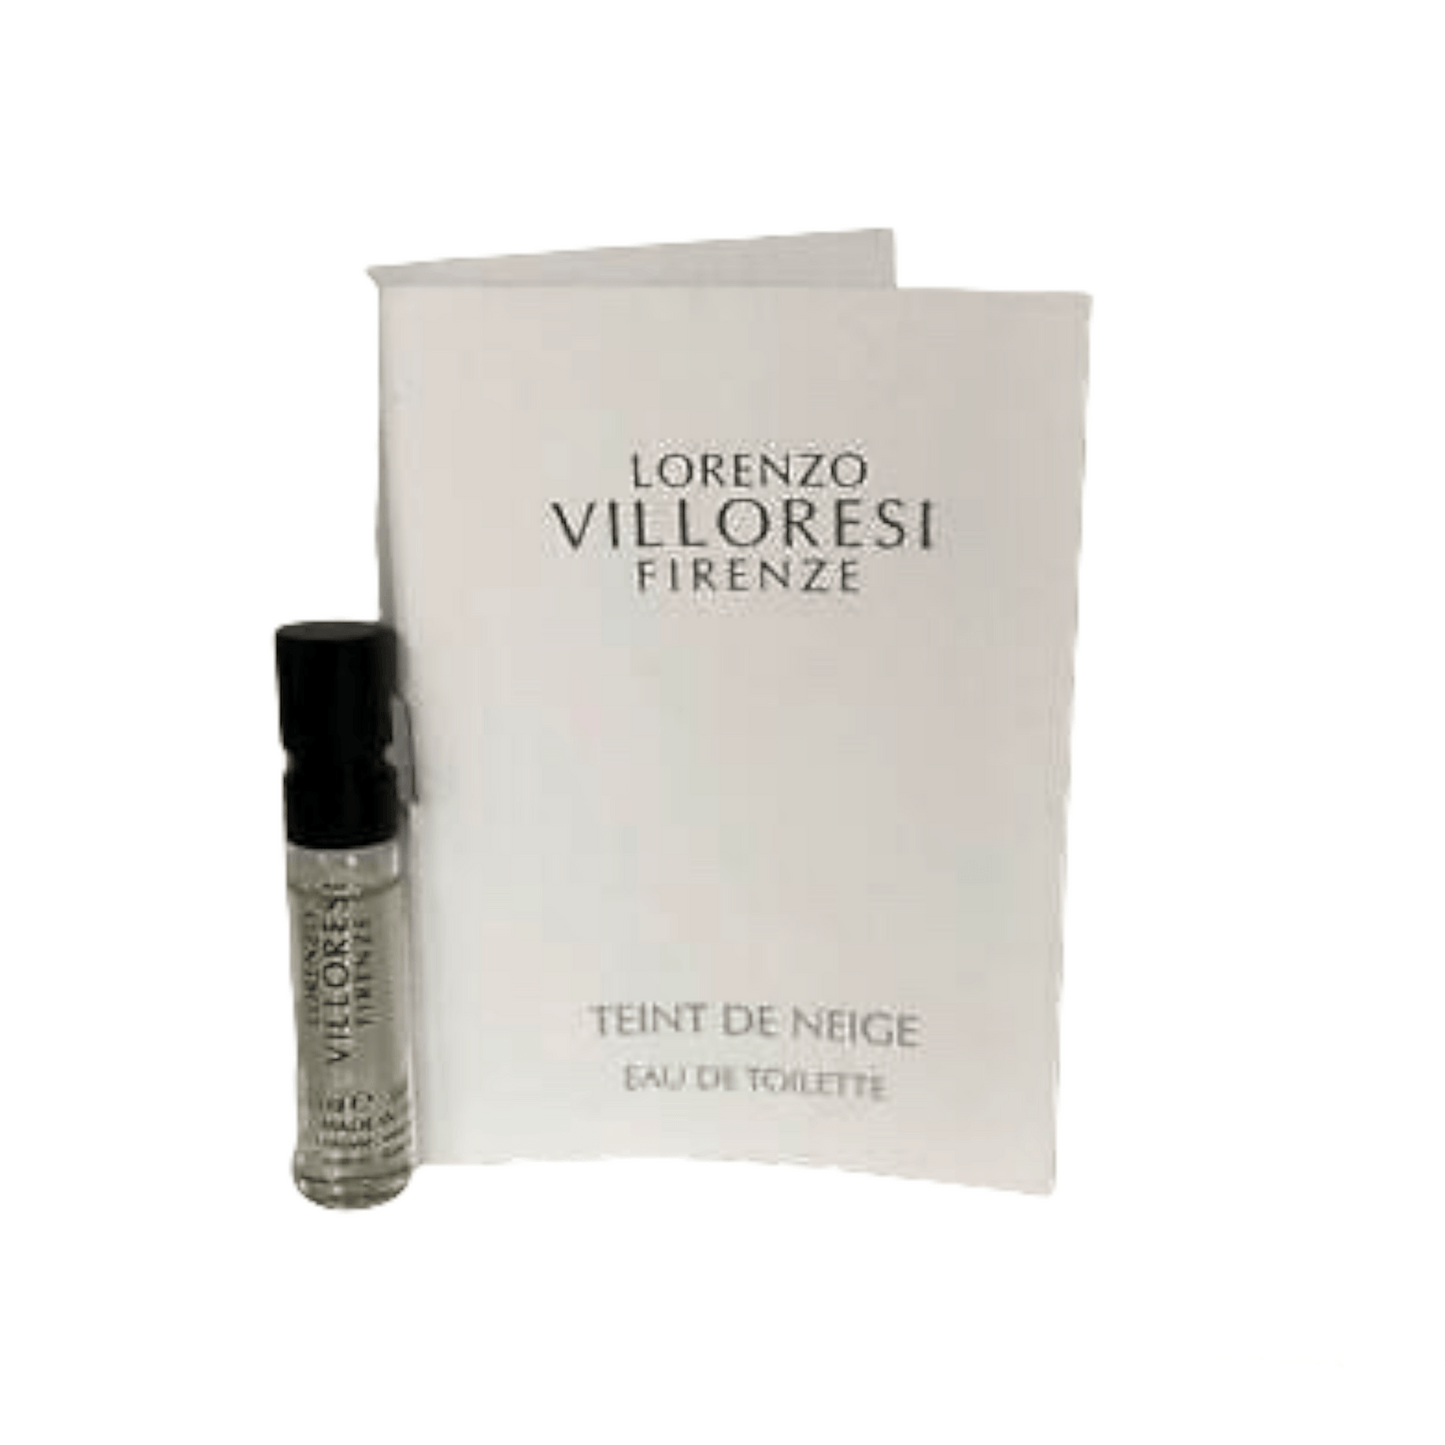 Lorenzo Villoresi Firenze Teint de Neige amostra de perfume oficial 2ml 0.06 fl. onças